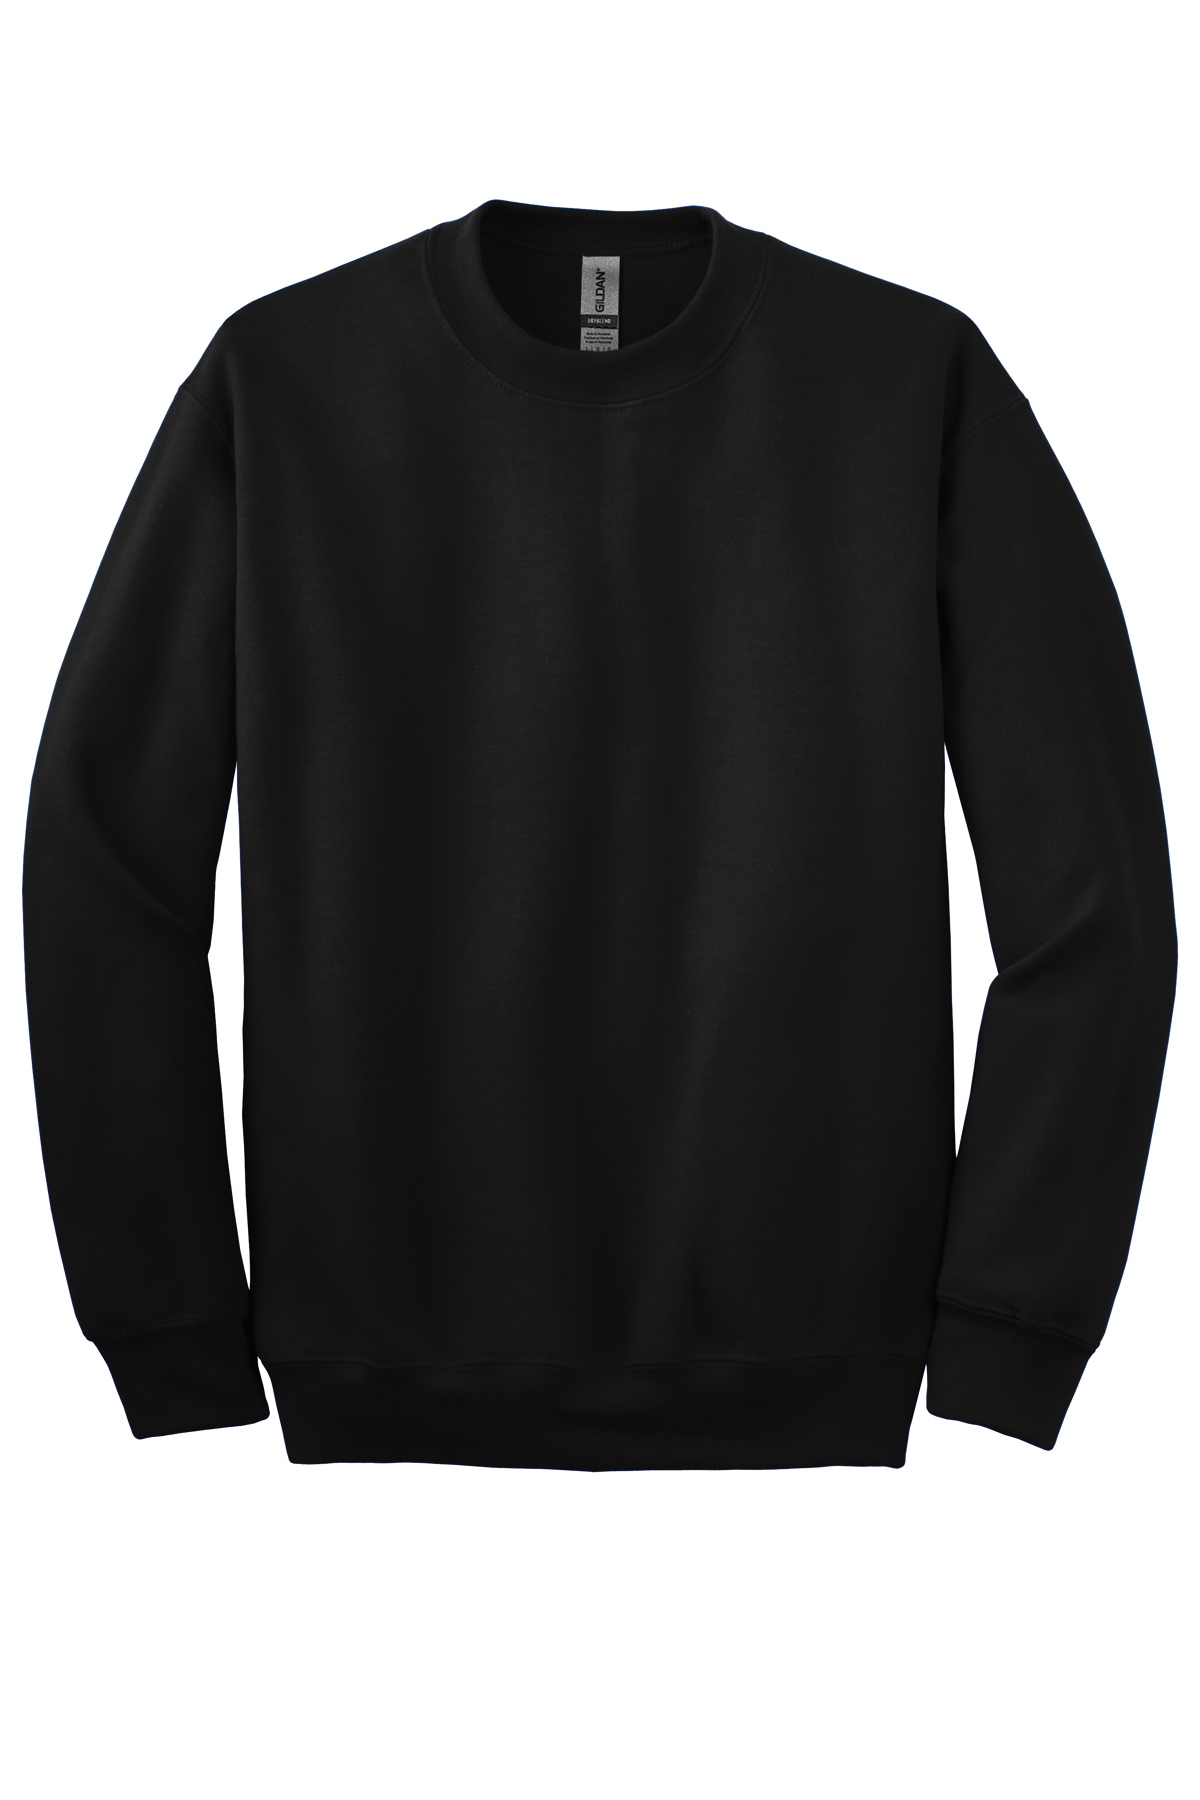 Gildan - DryBlend Crewneck Sweatshirt | Product | SanMar